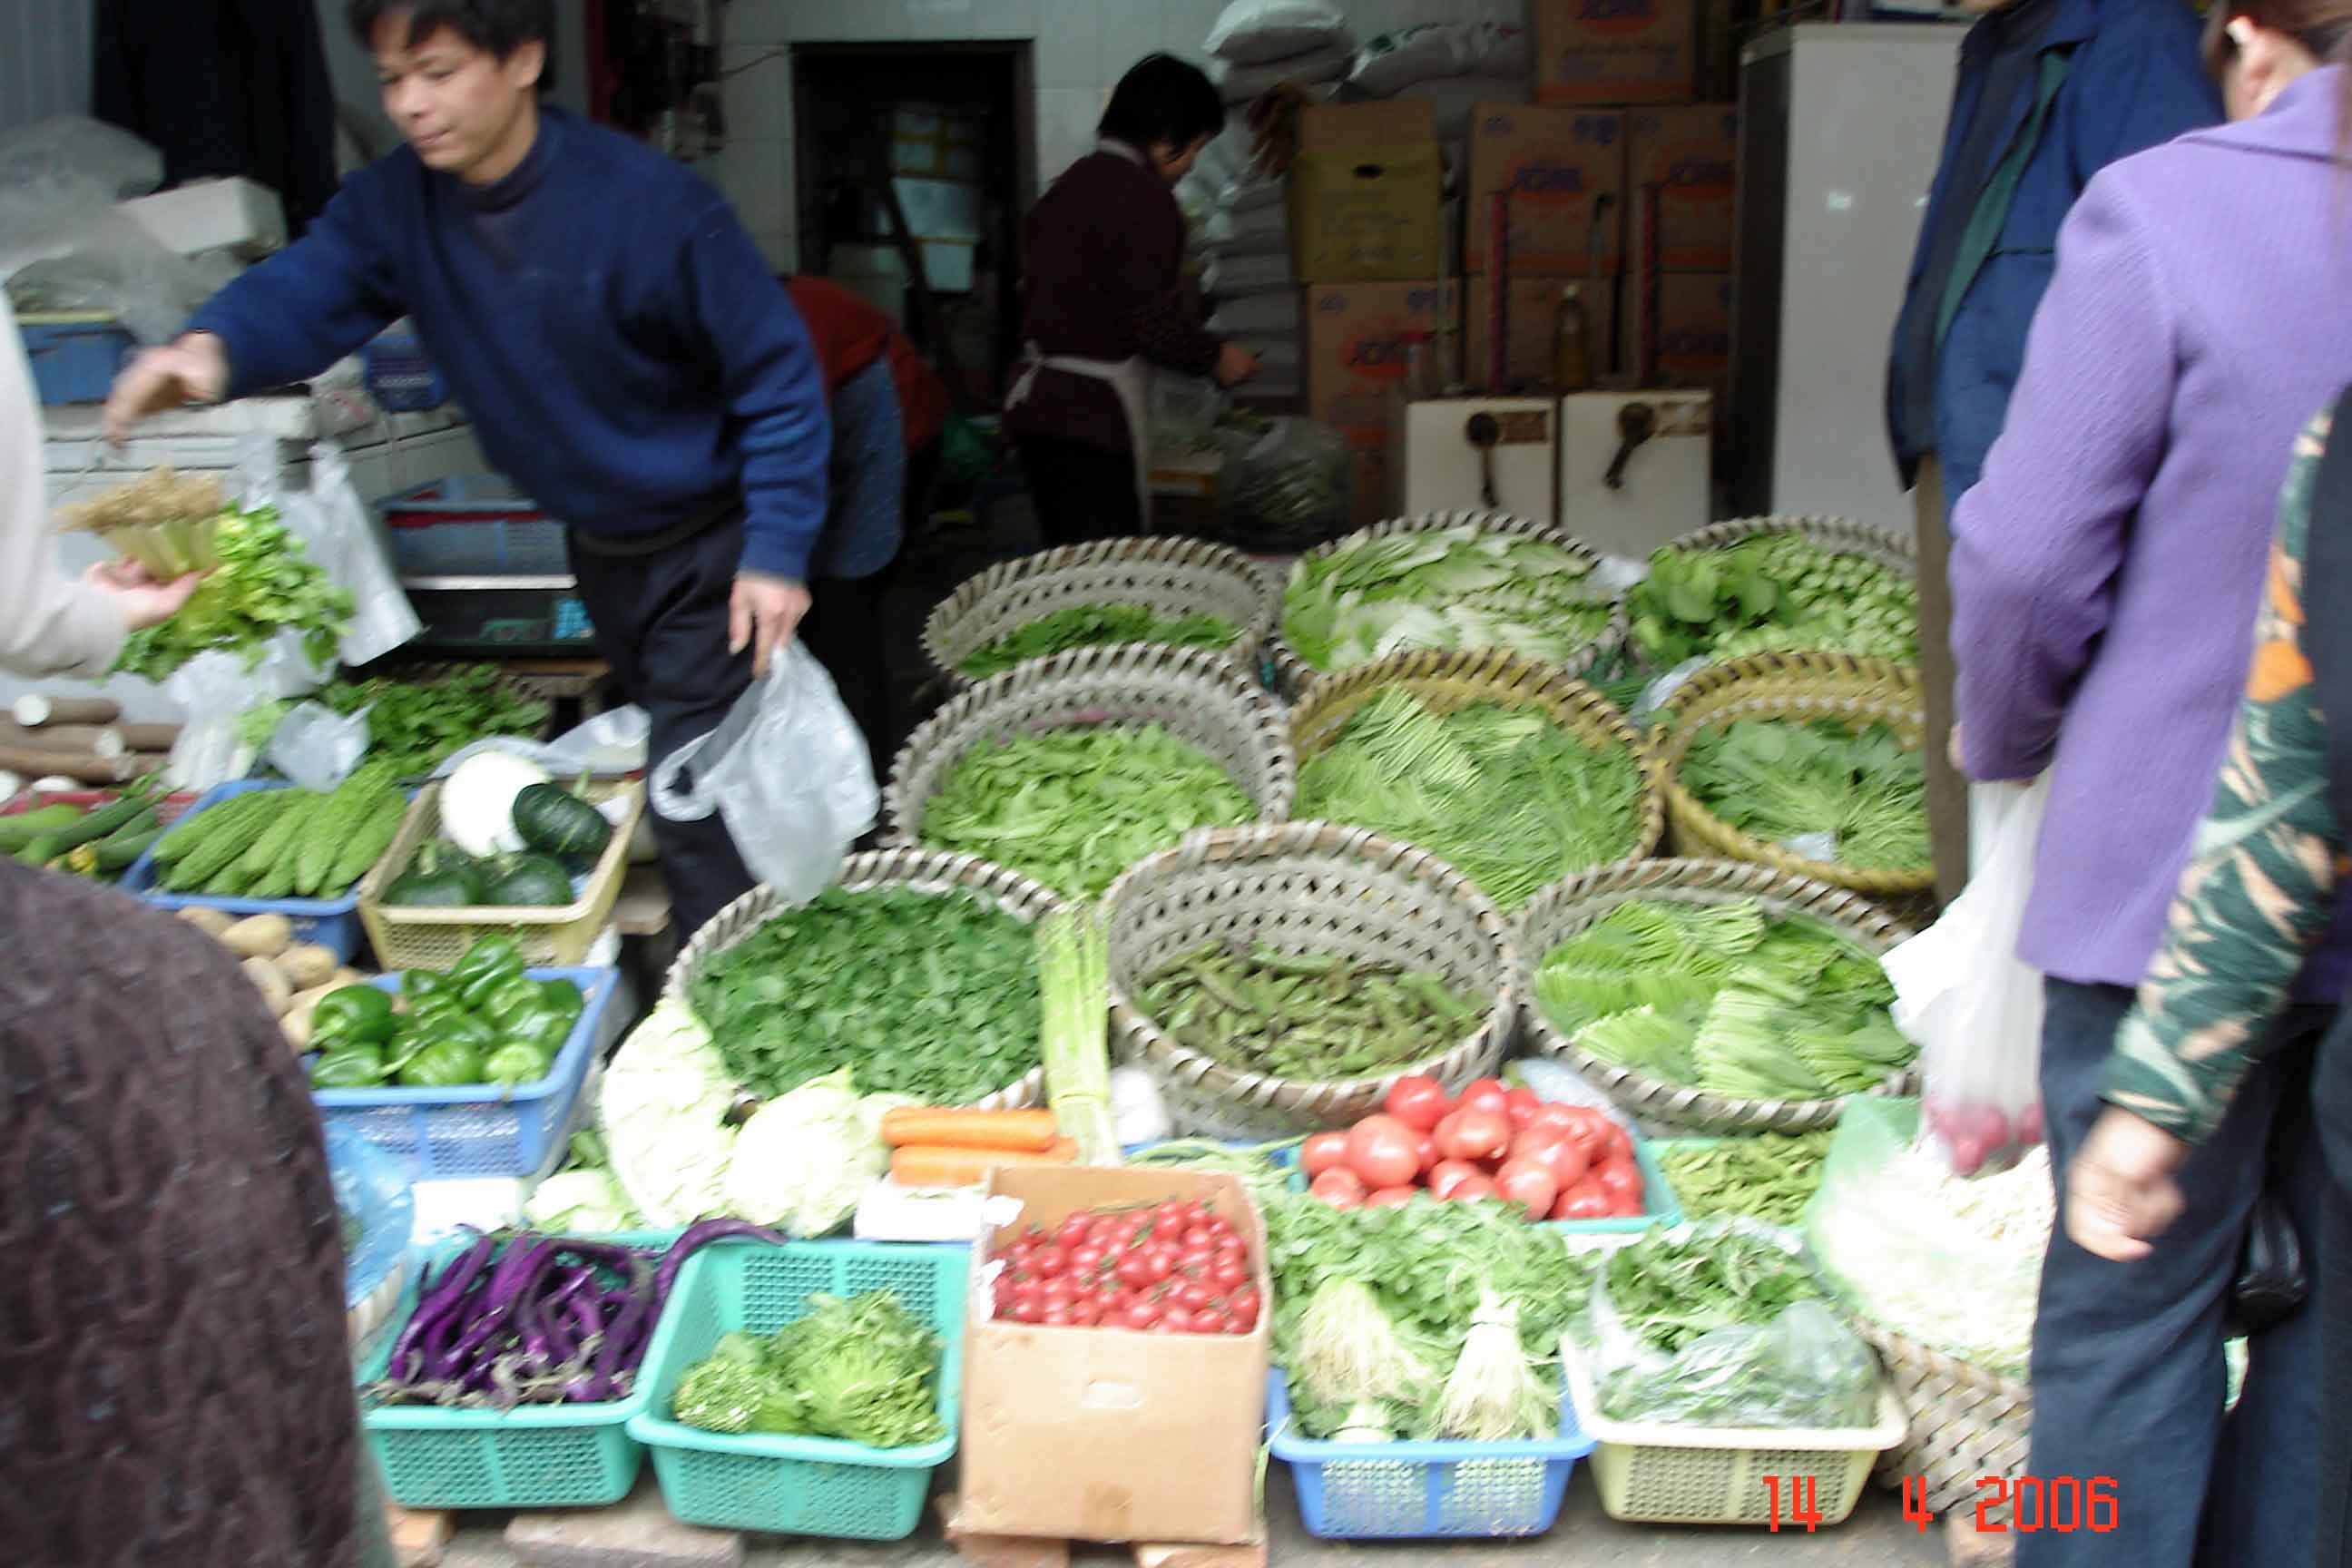 Beautiful-fresh-greens-and-veggies - Markets Chinese Old Quarter